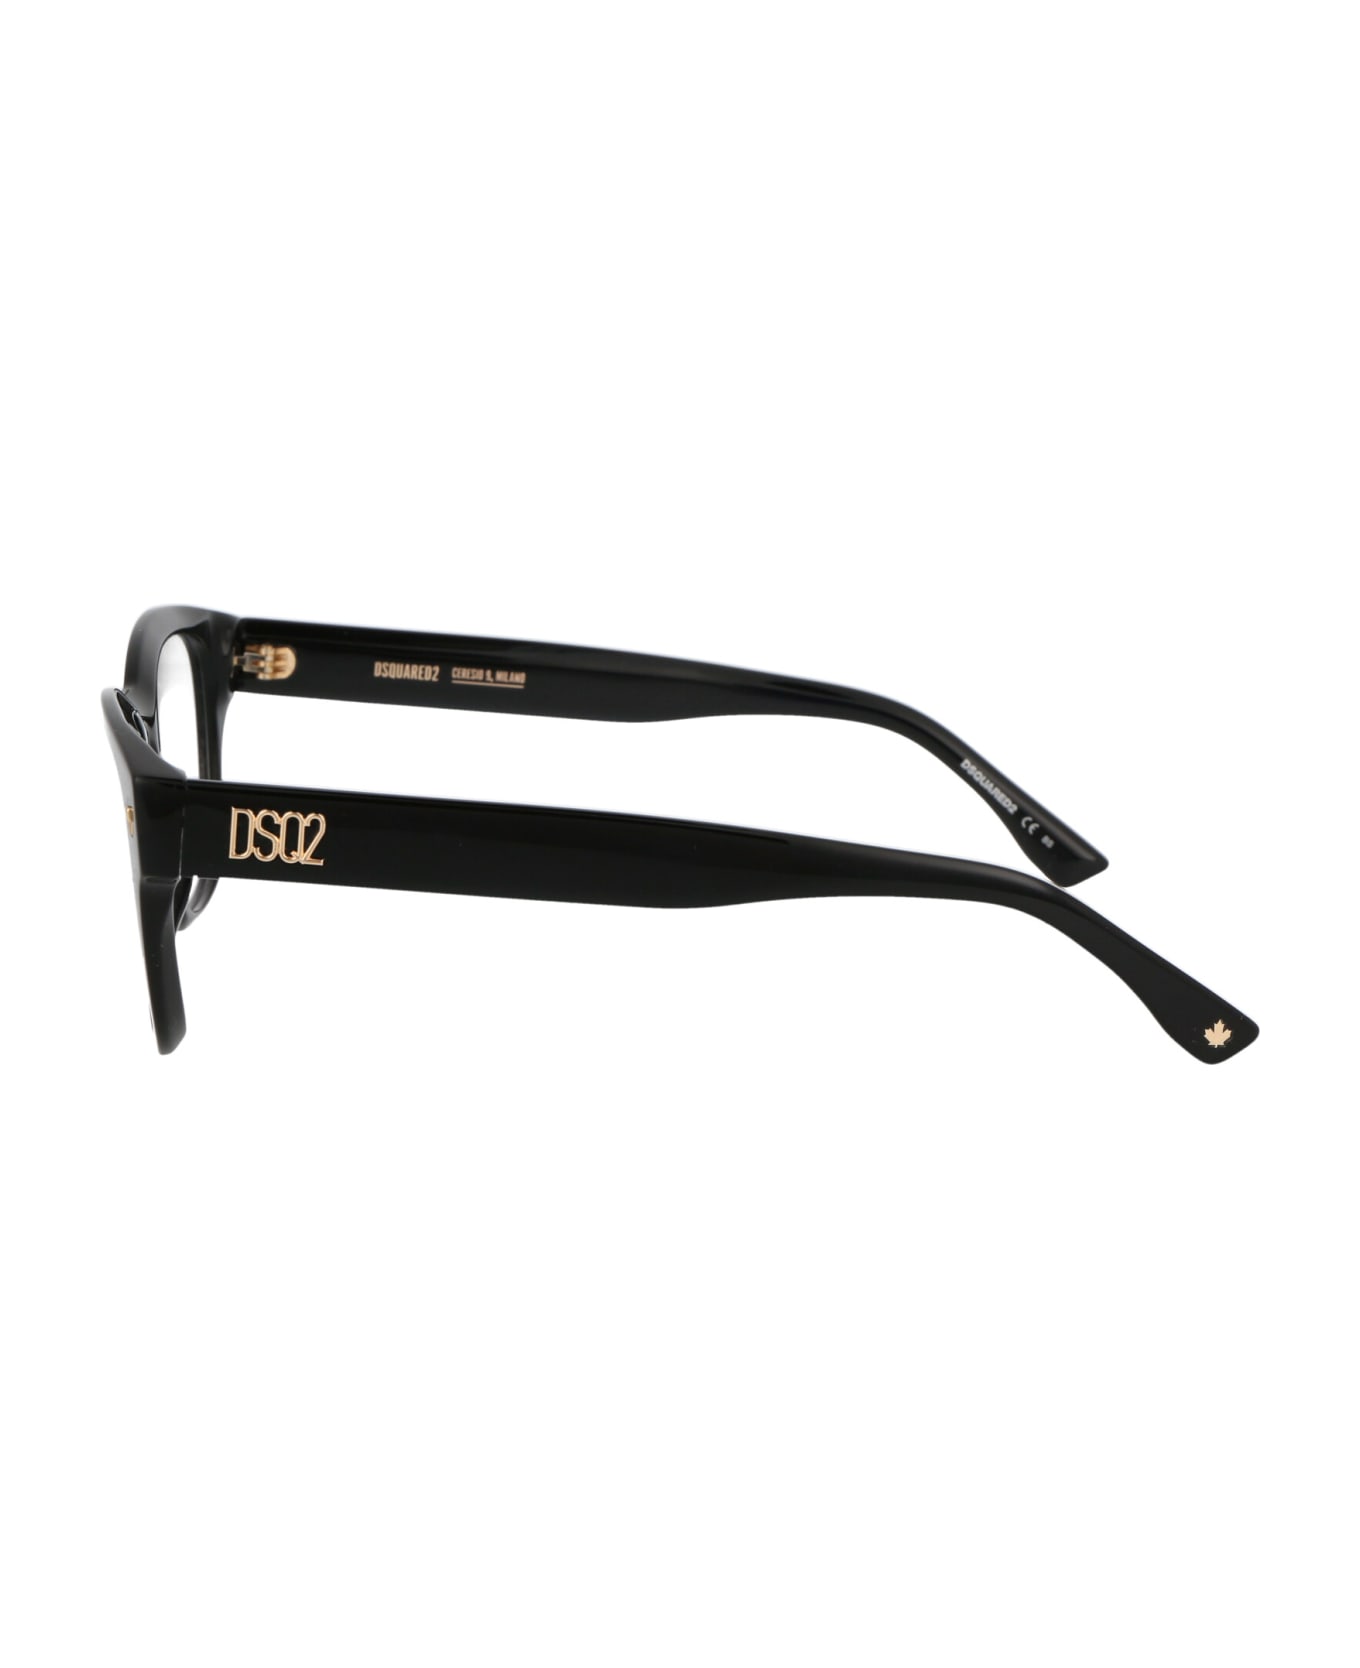 Dsquared2 Eyewear D2 0065 Glasses - 807 BLACK